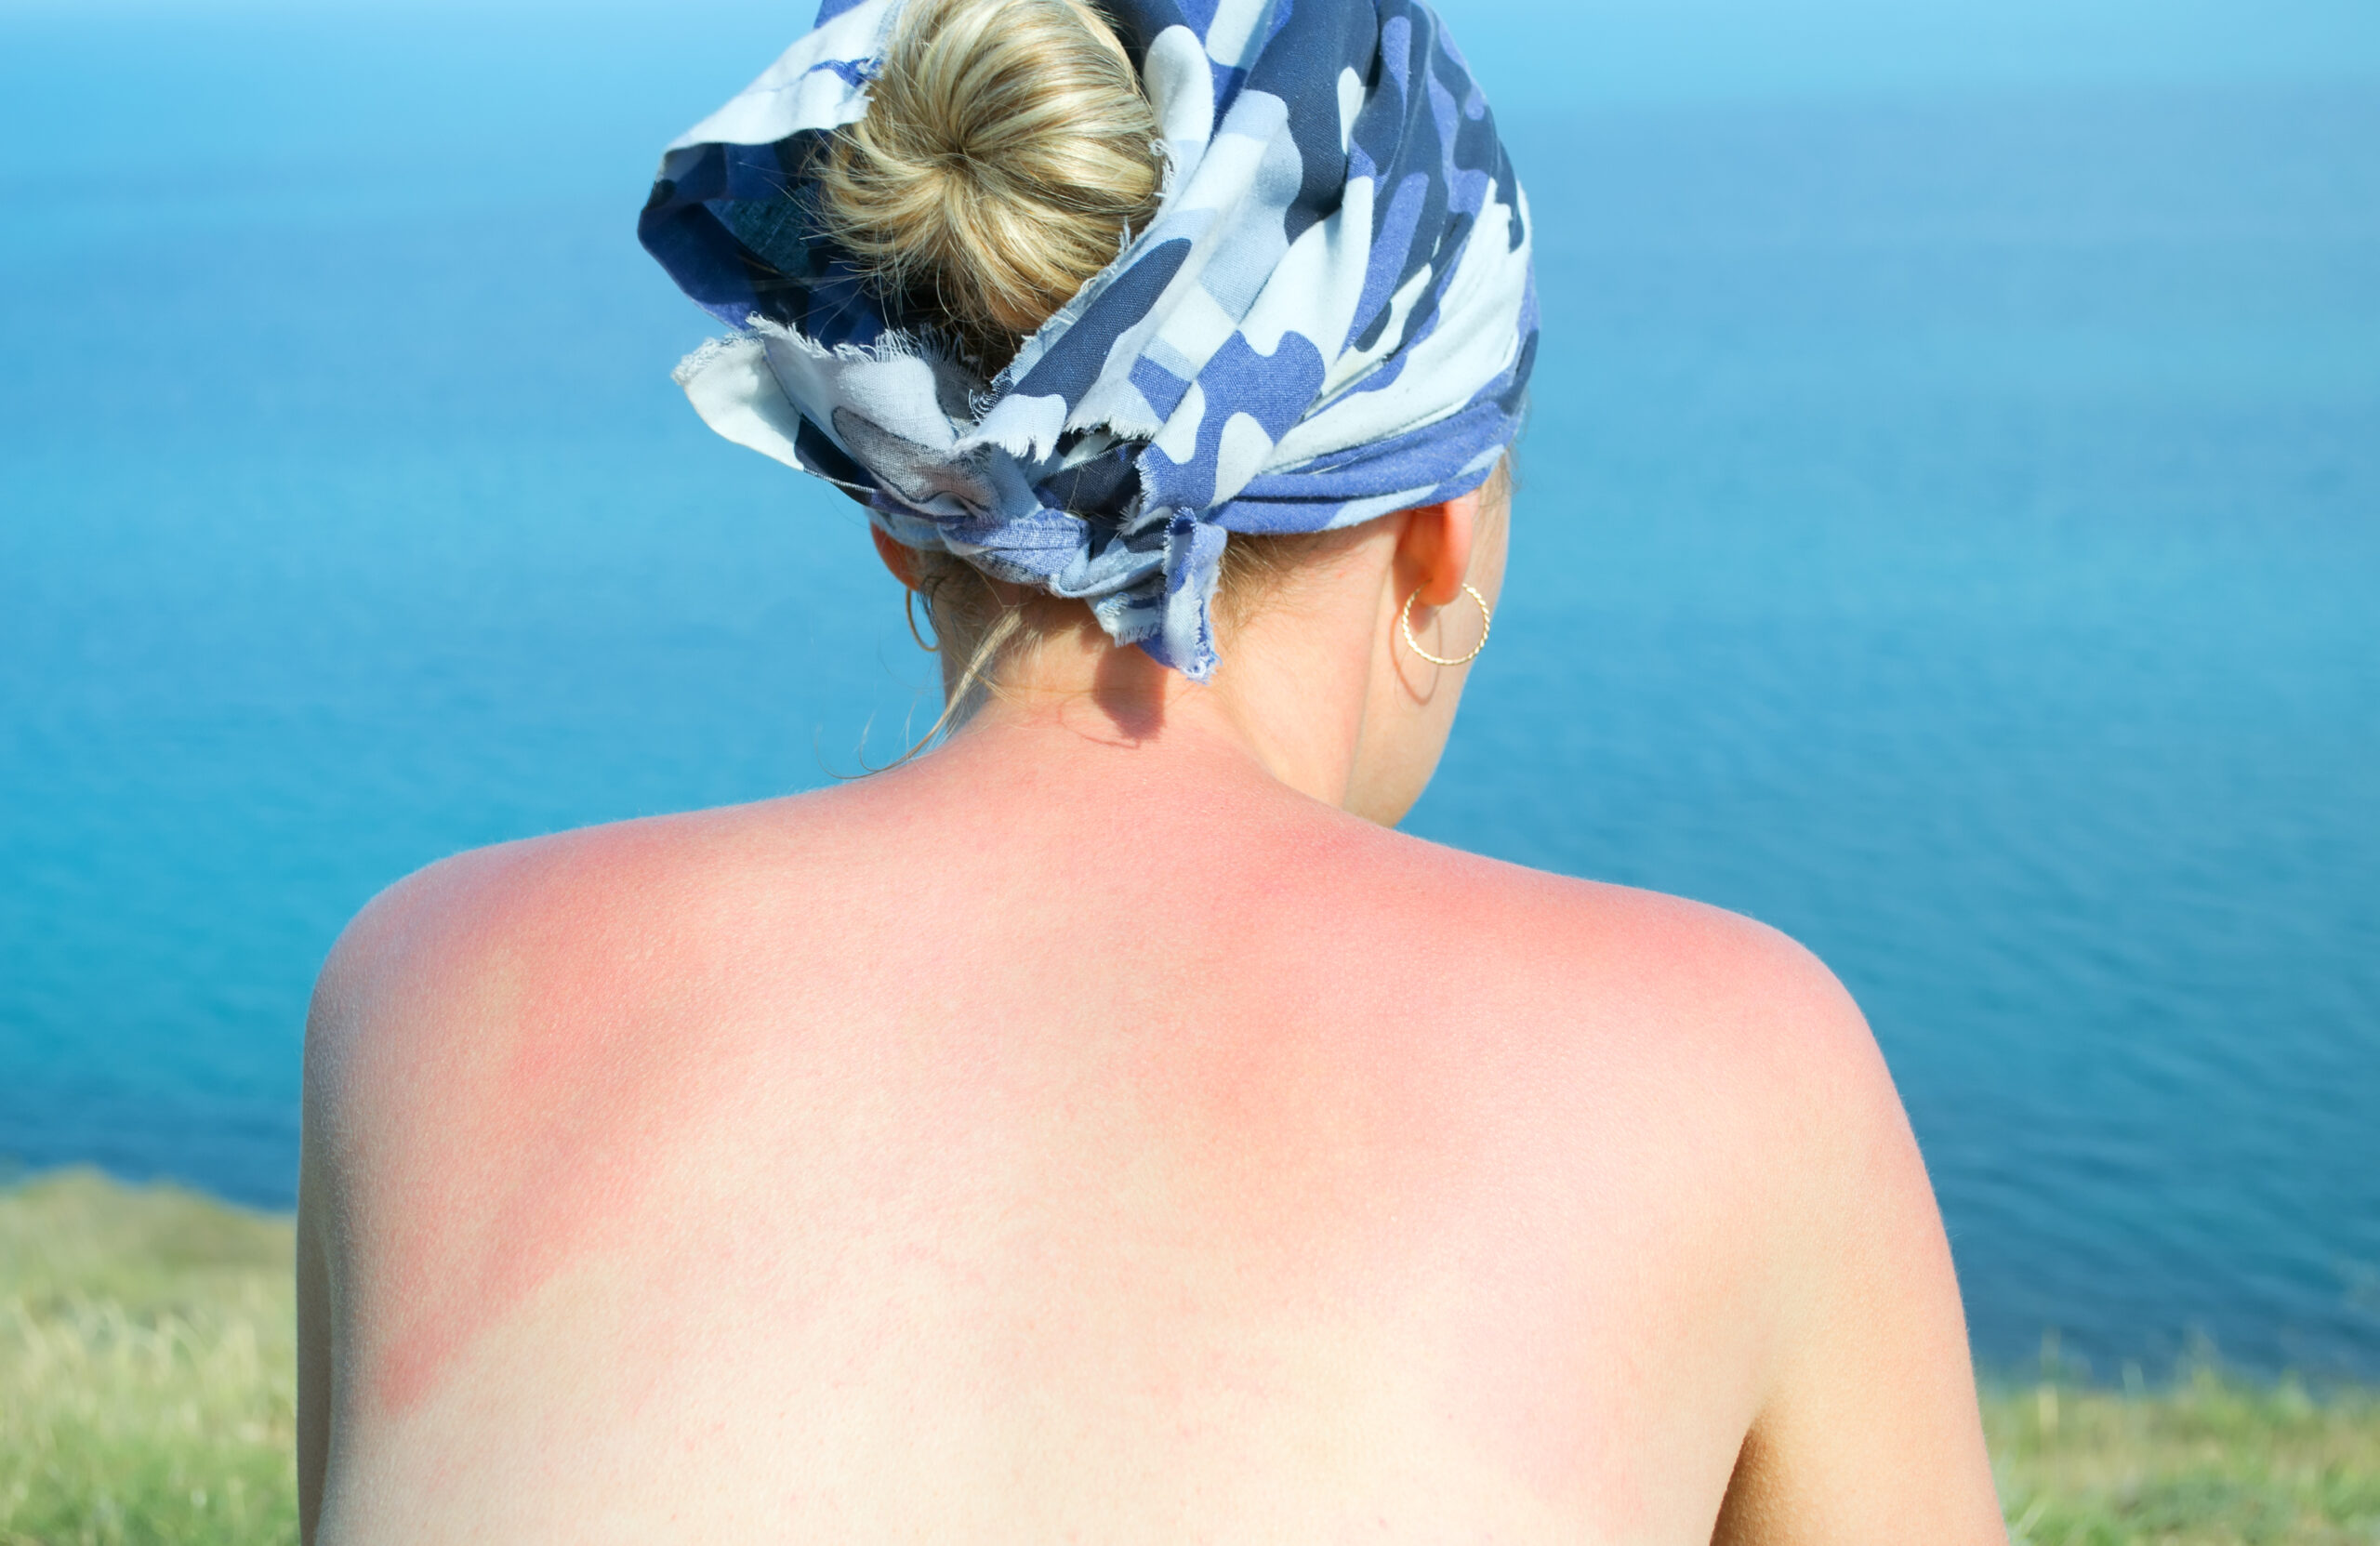 Best ways to treat sunburn on holiday